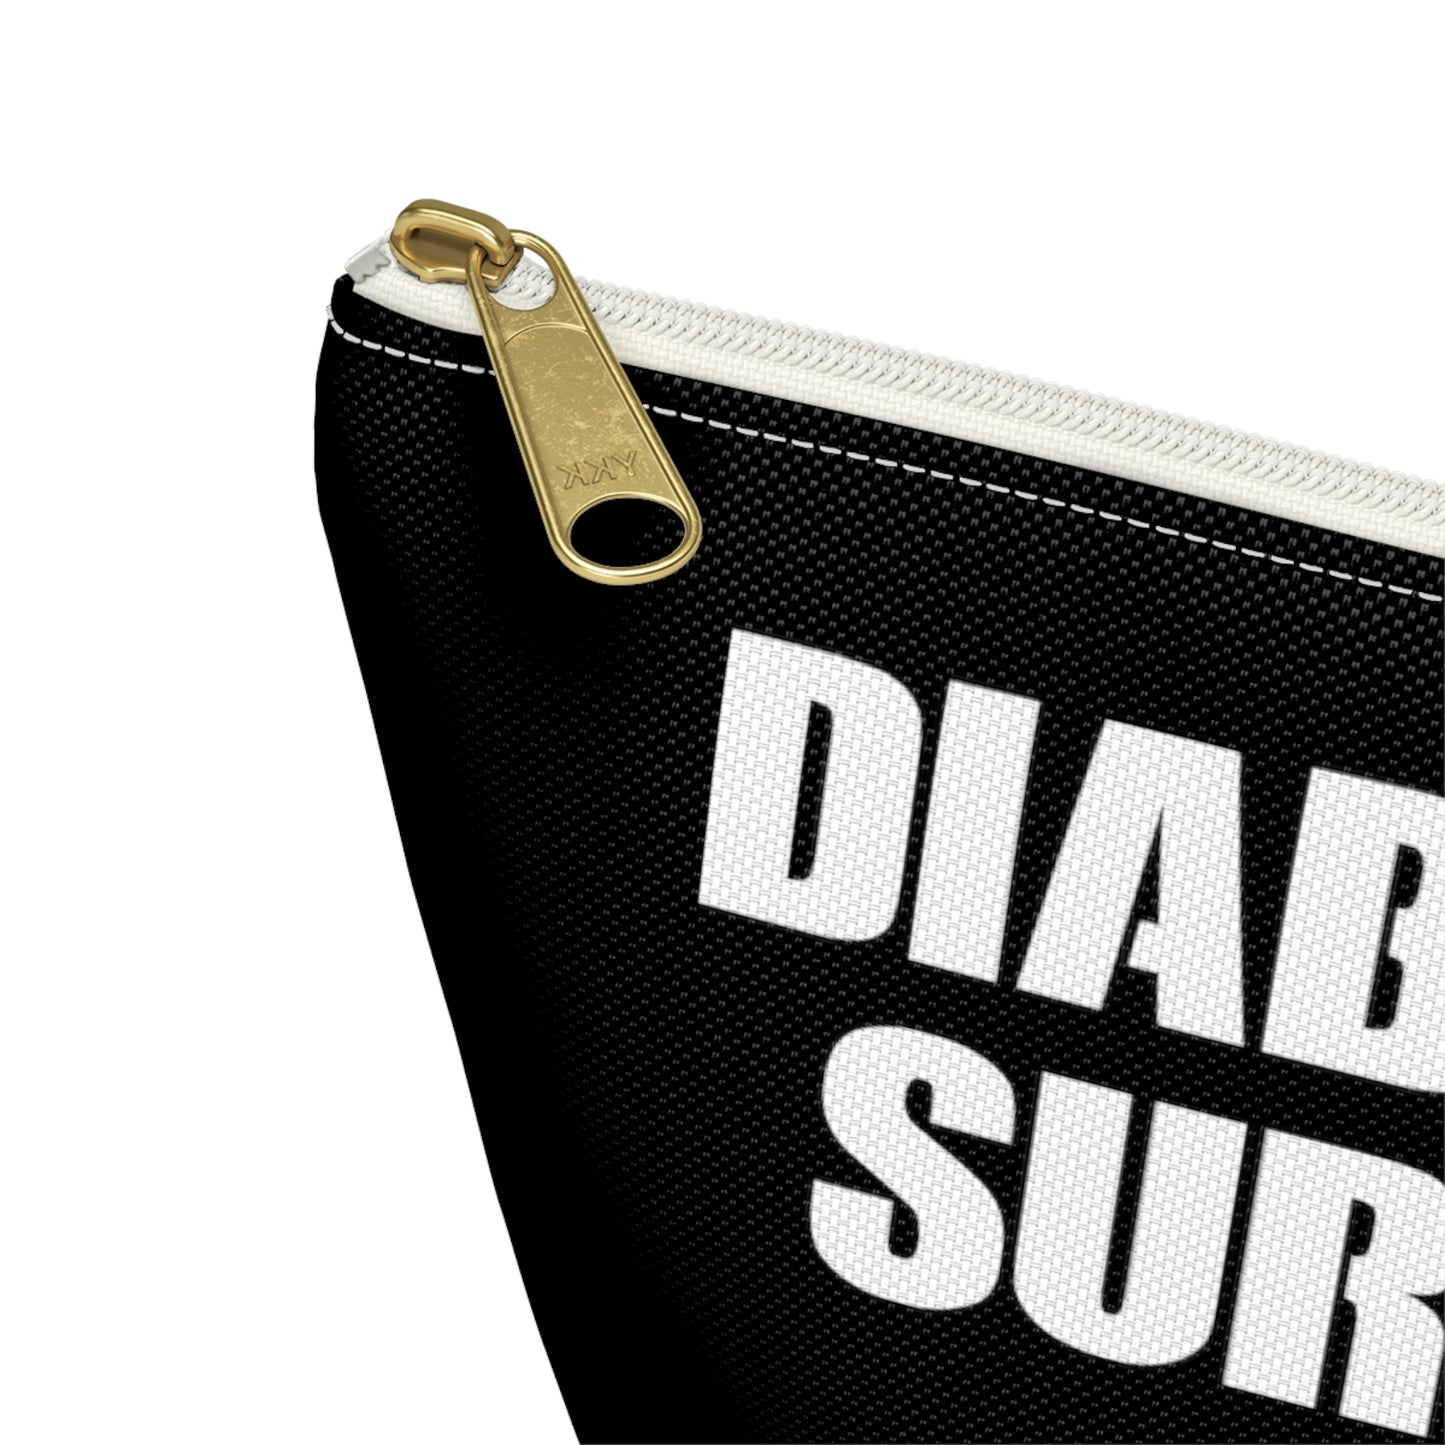 Diabadass Survival Kit Bag, Fun Diabetes Diabetic Supply carrying Case Badass Type 1 2 Black Accessory Zipper Pouch Travel Bag w T-bottom